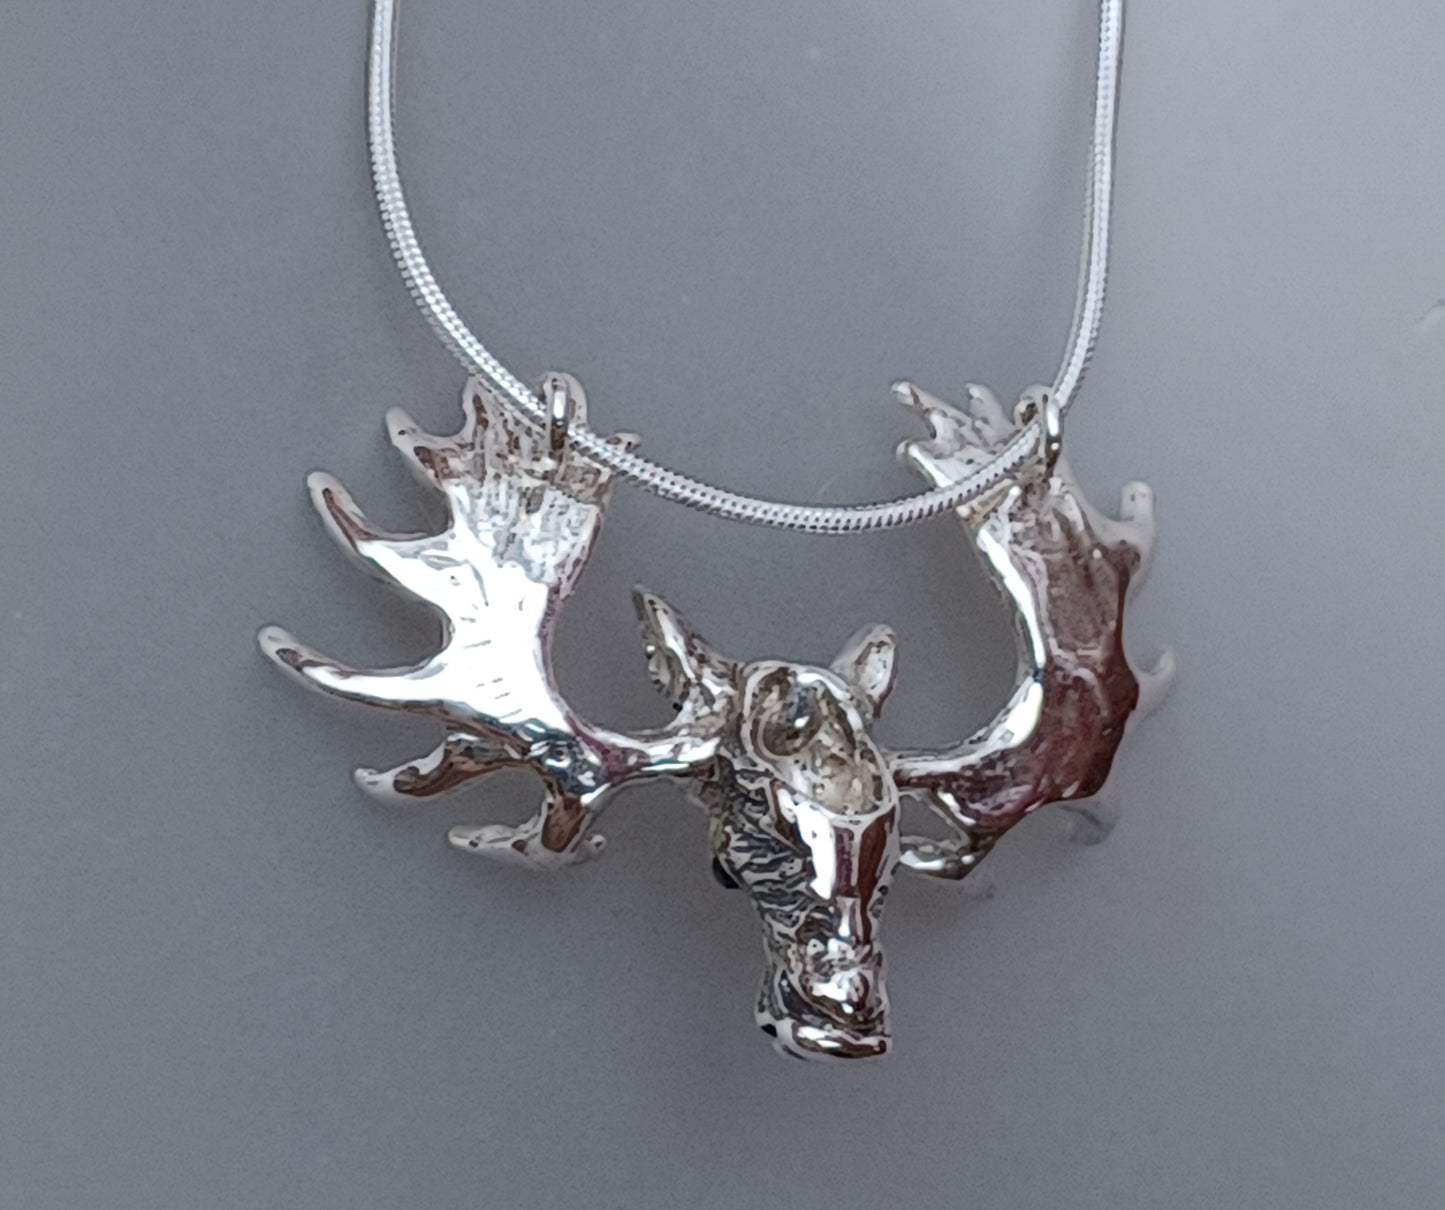 Moose Large pendant necklace. Sapphire stone set eyes.  Heavy Snake chain.  Sterling silver artist original. Impressive piece!